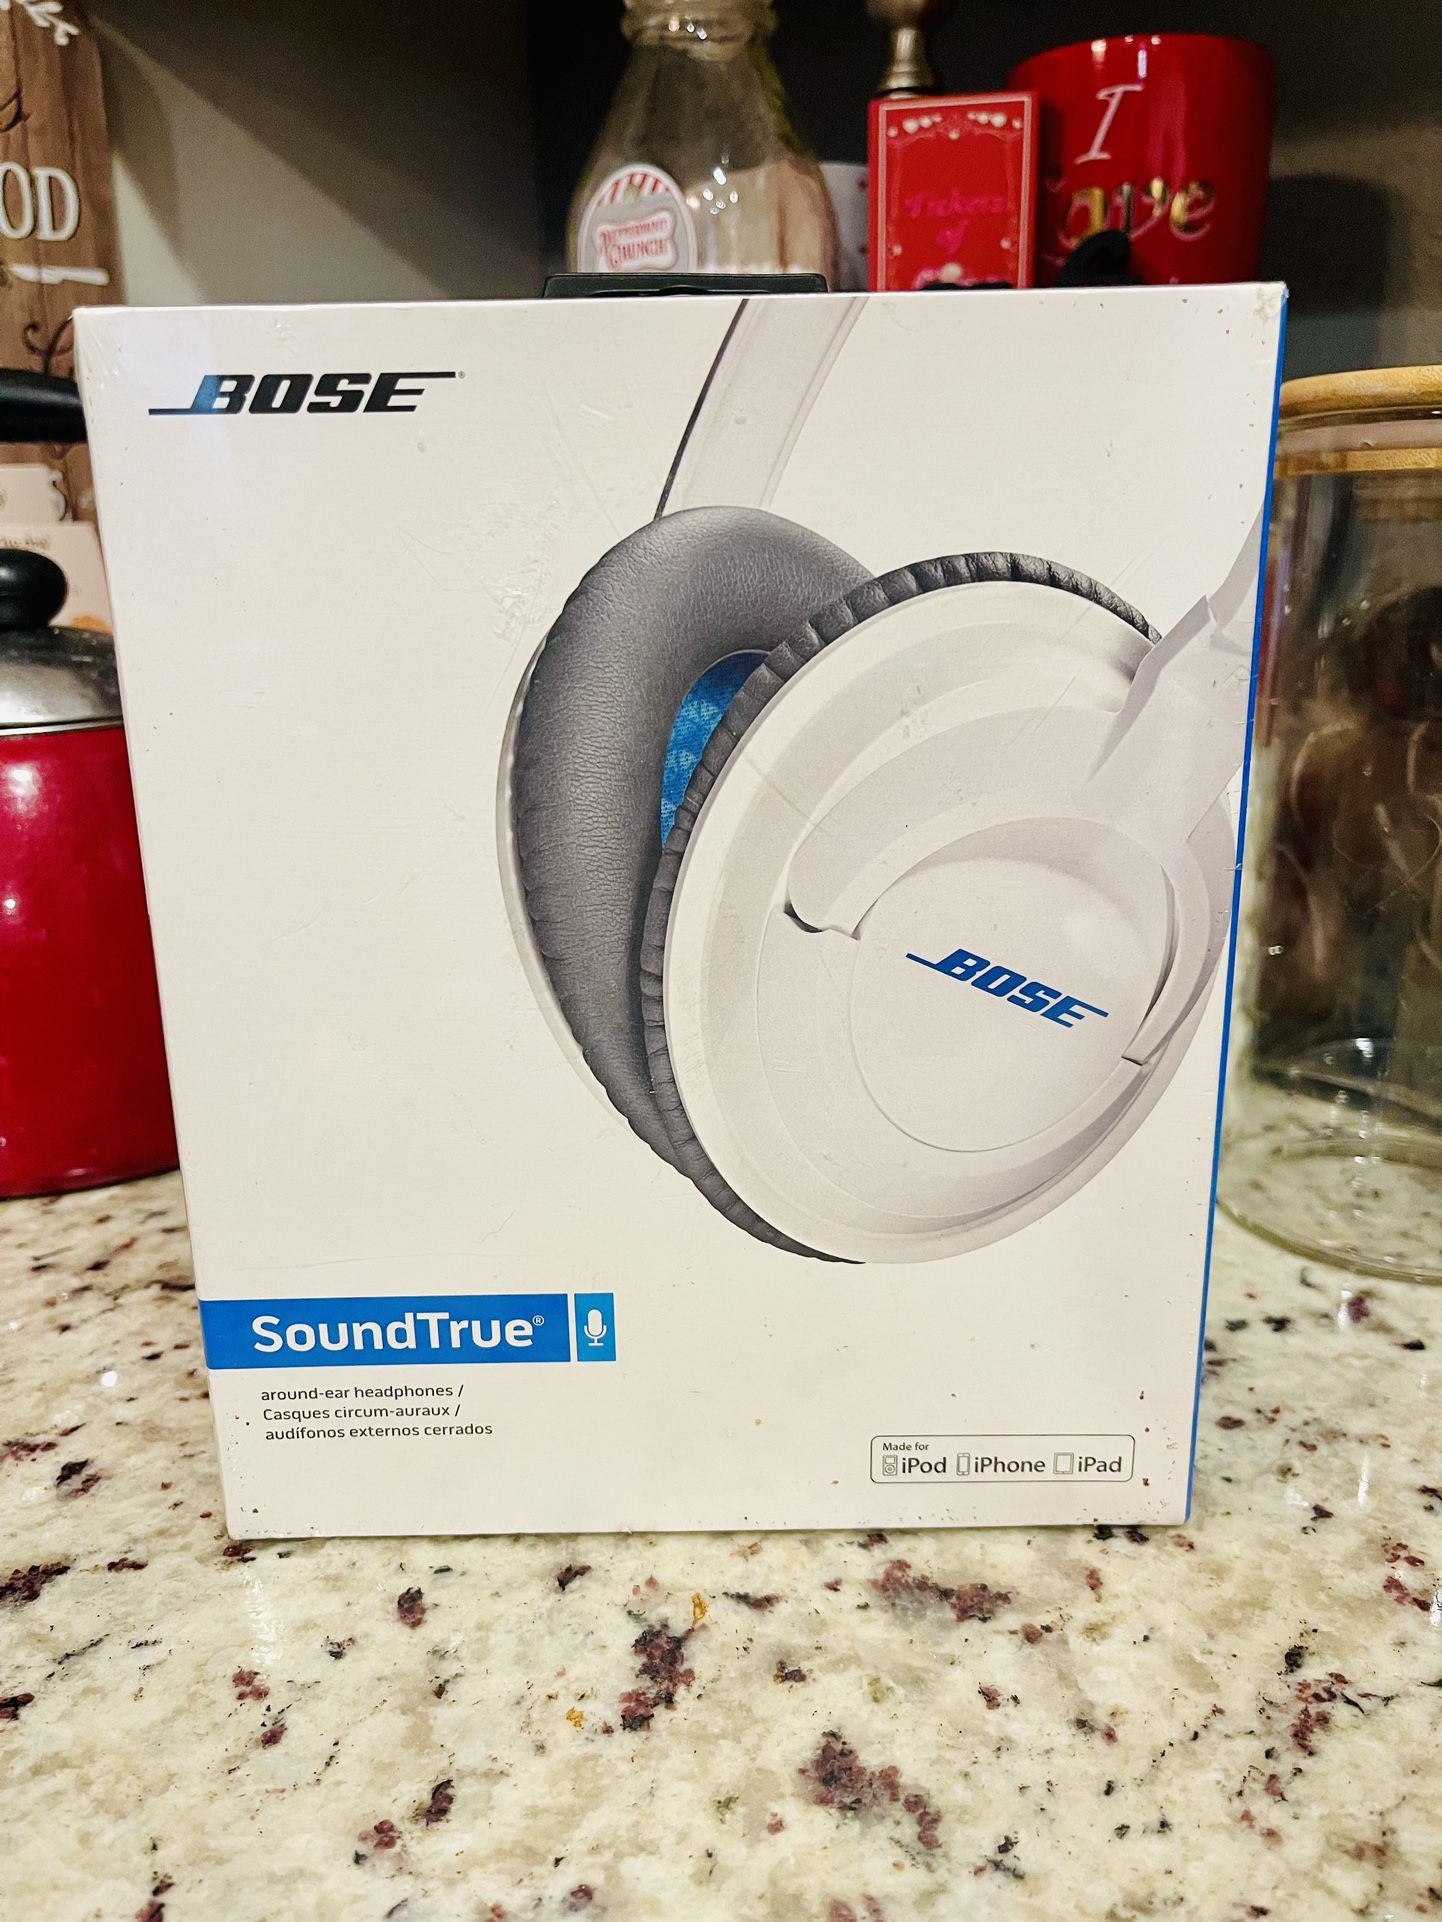 BOSE Sound True Around The Ear Headphones $70